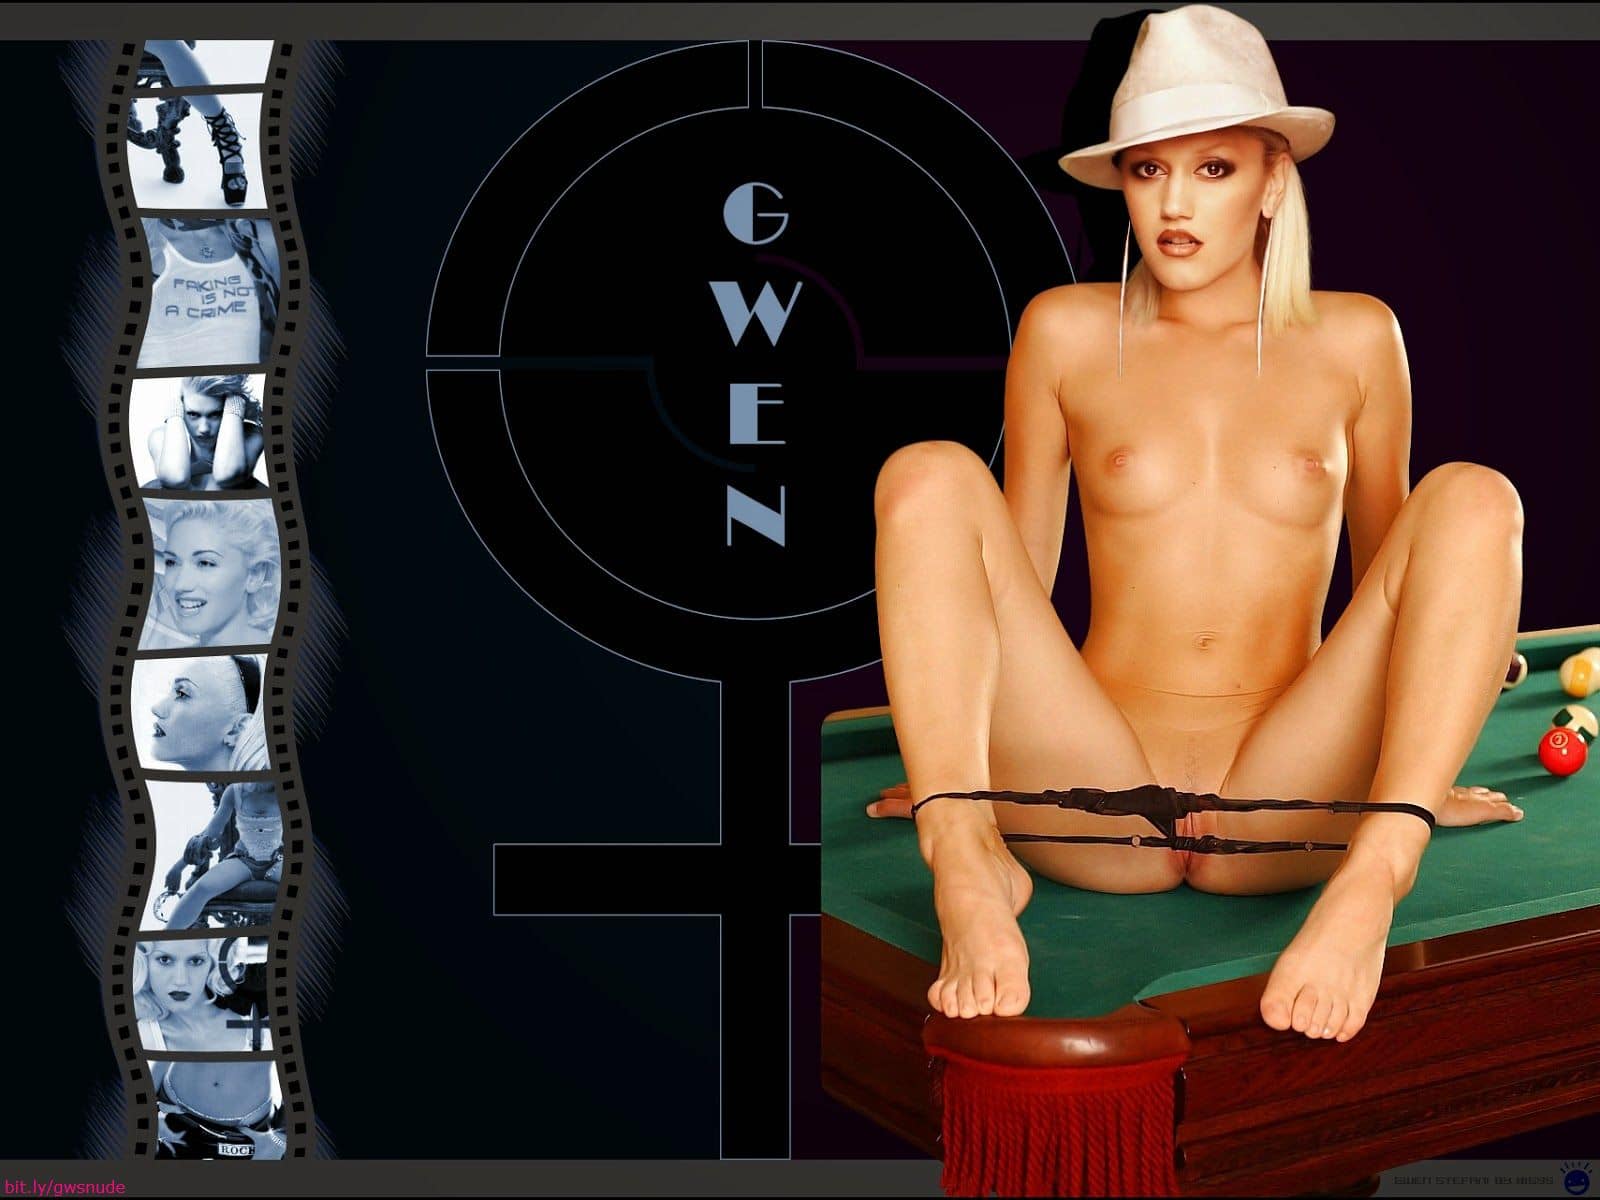 Gwen Stefani Nude Photos Found - No Doubt About it! 